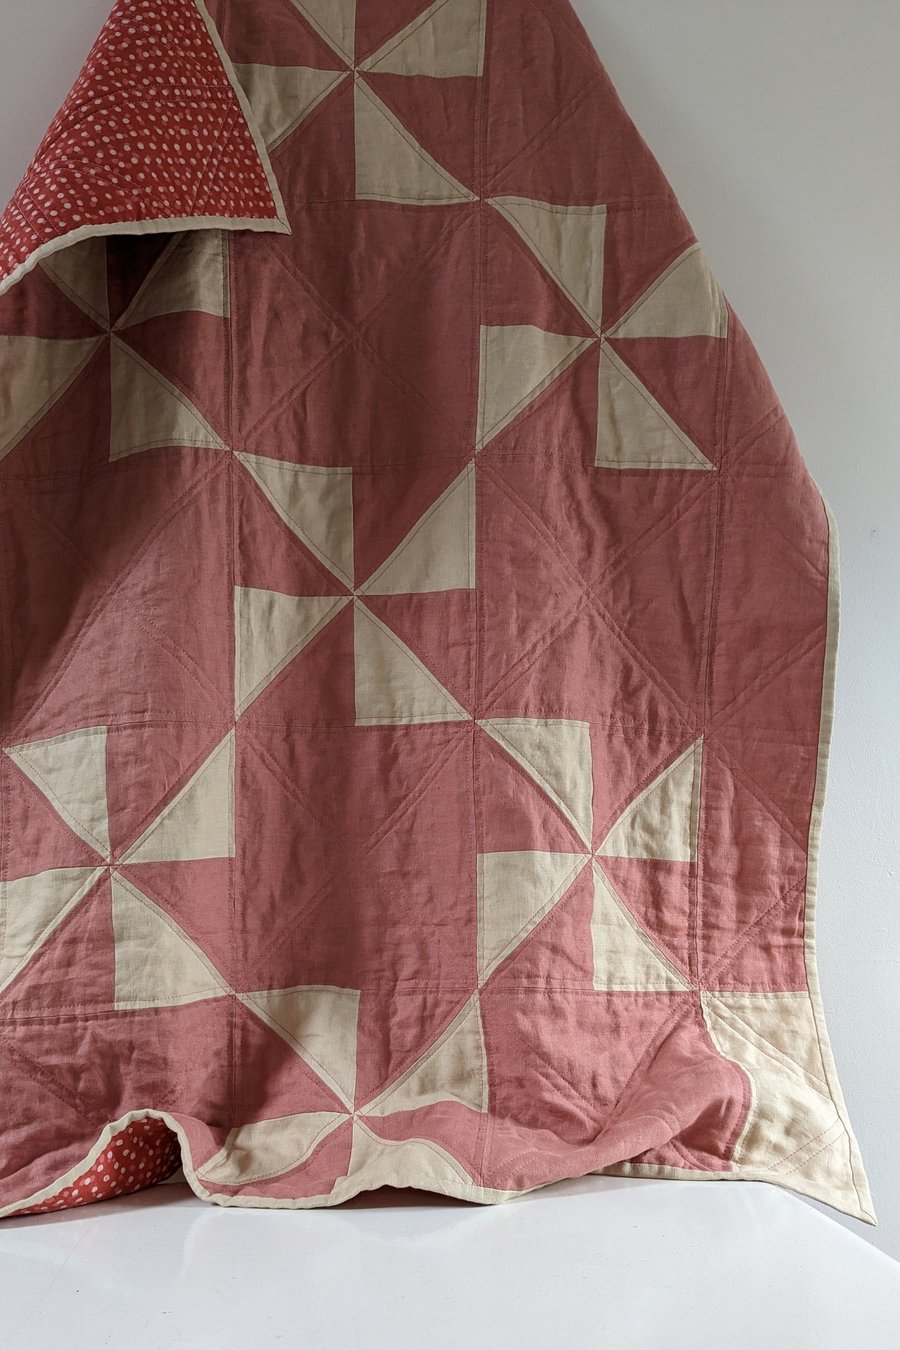 Dusty pink and beige linen patchwork quilt, 130cm x 100cm